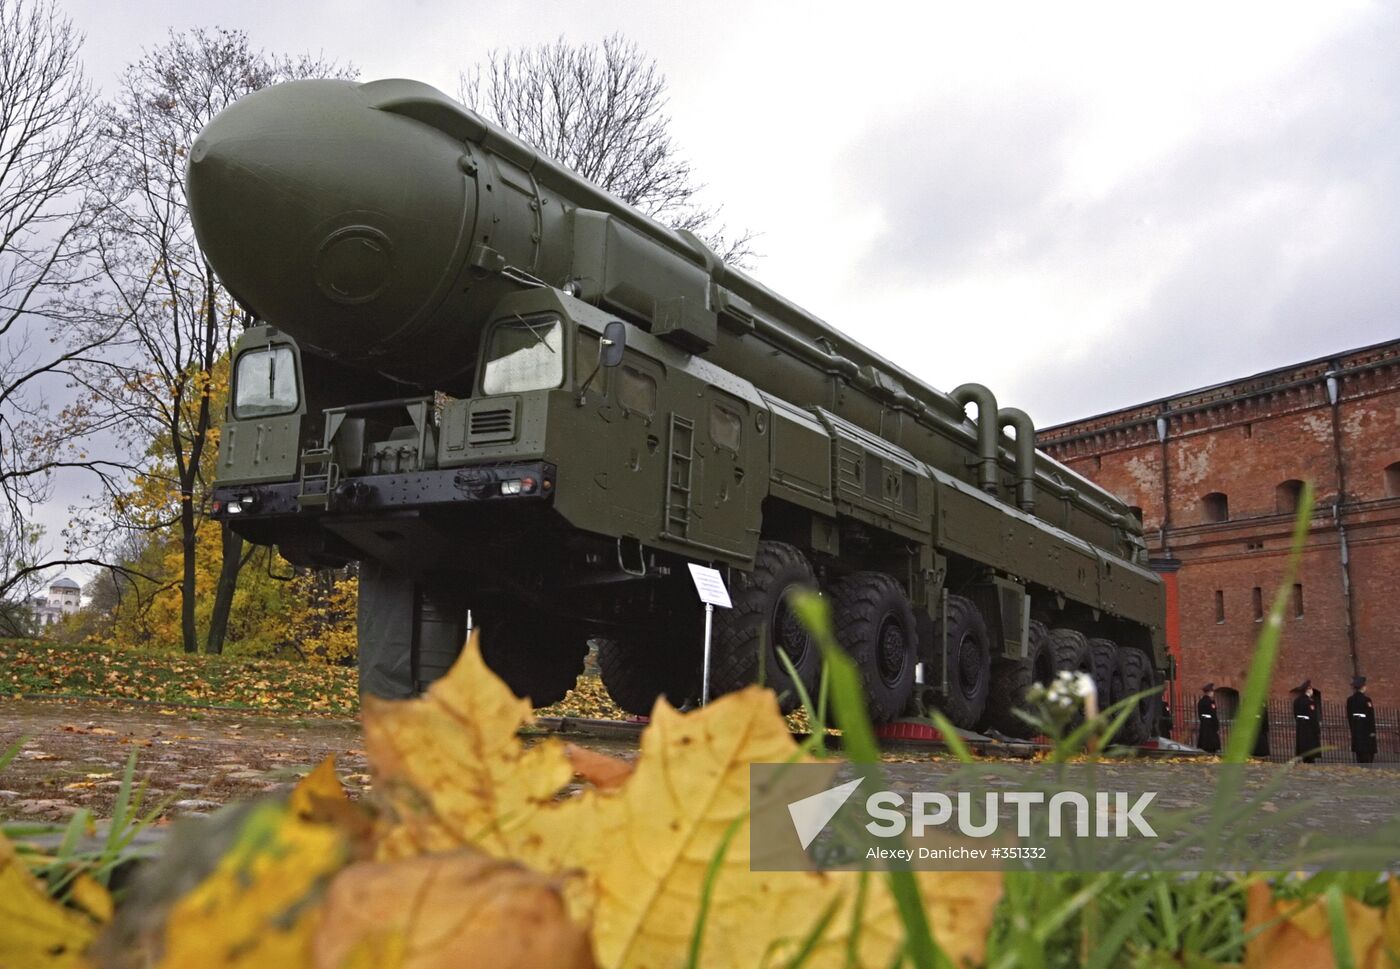 Topol ICBM mobile launcher displayed at museum in St. Petersburg